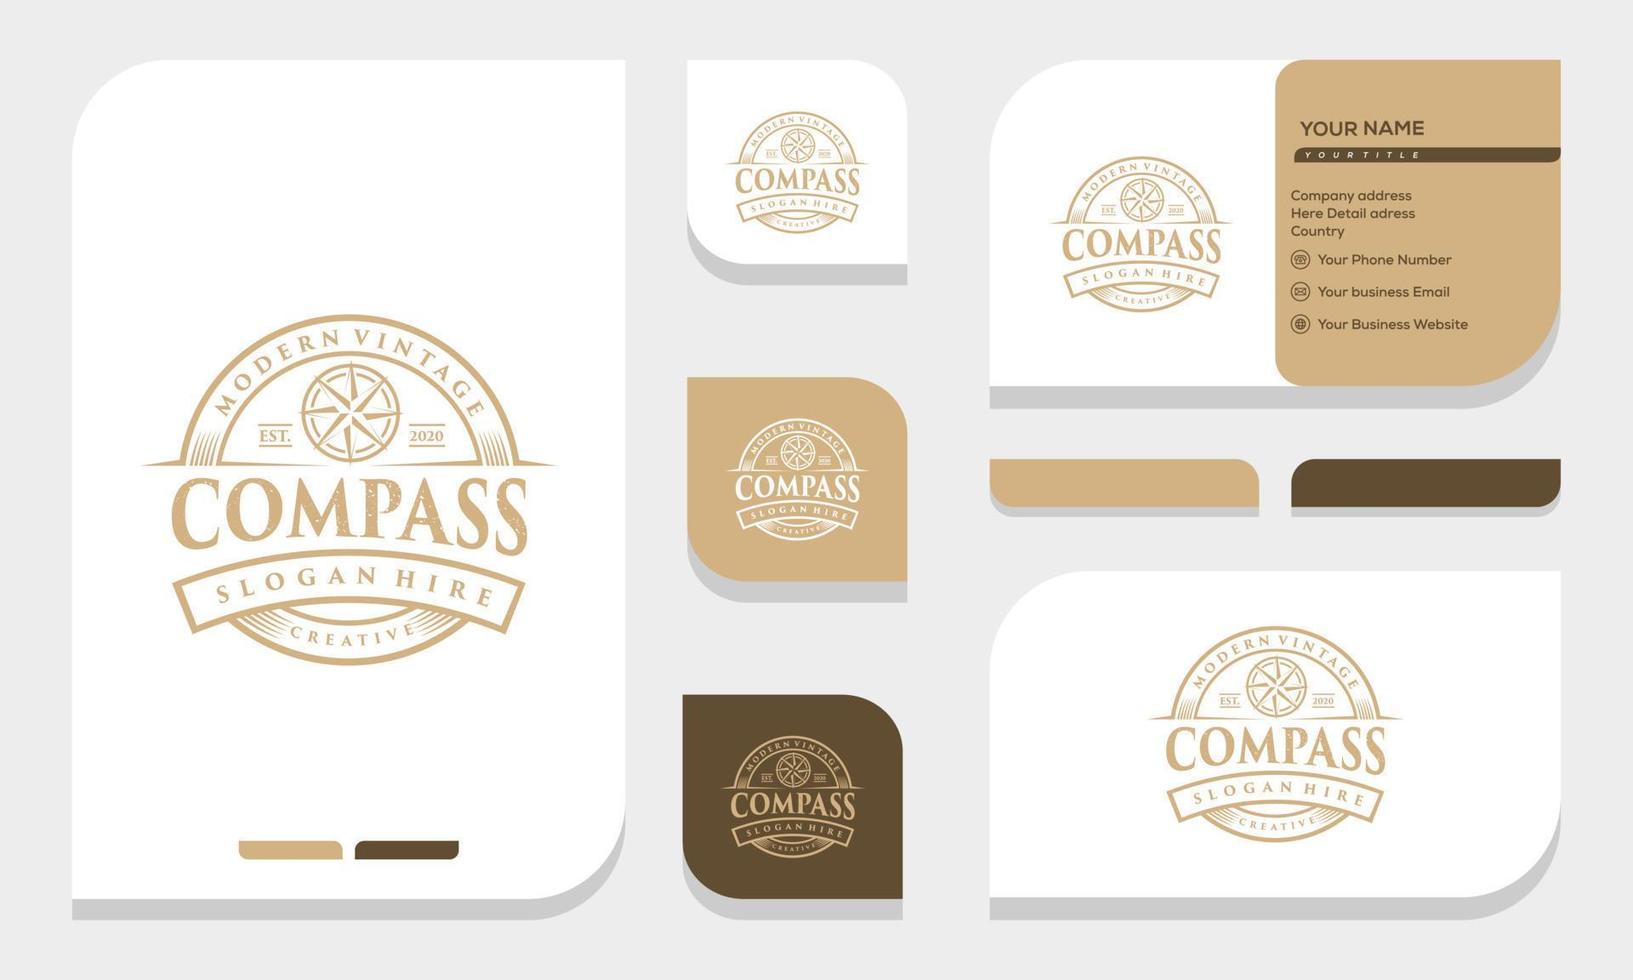 kreative Kompass-Konzept-Logo-Design-Vorlage. Logo und Visitenkarte vektor